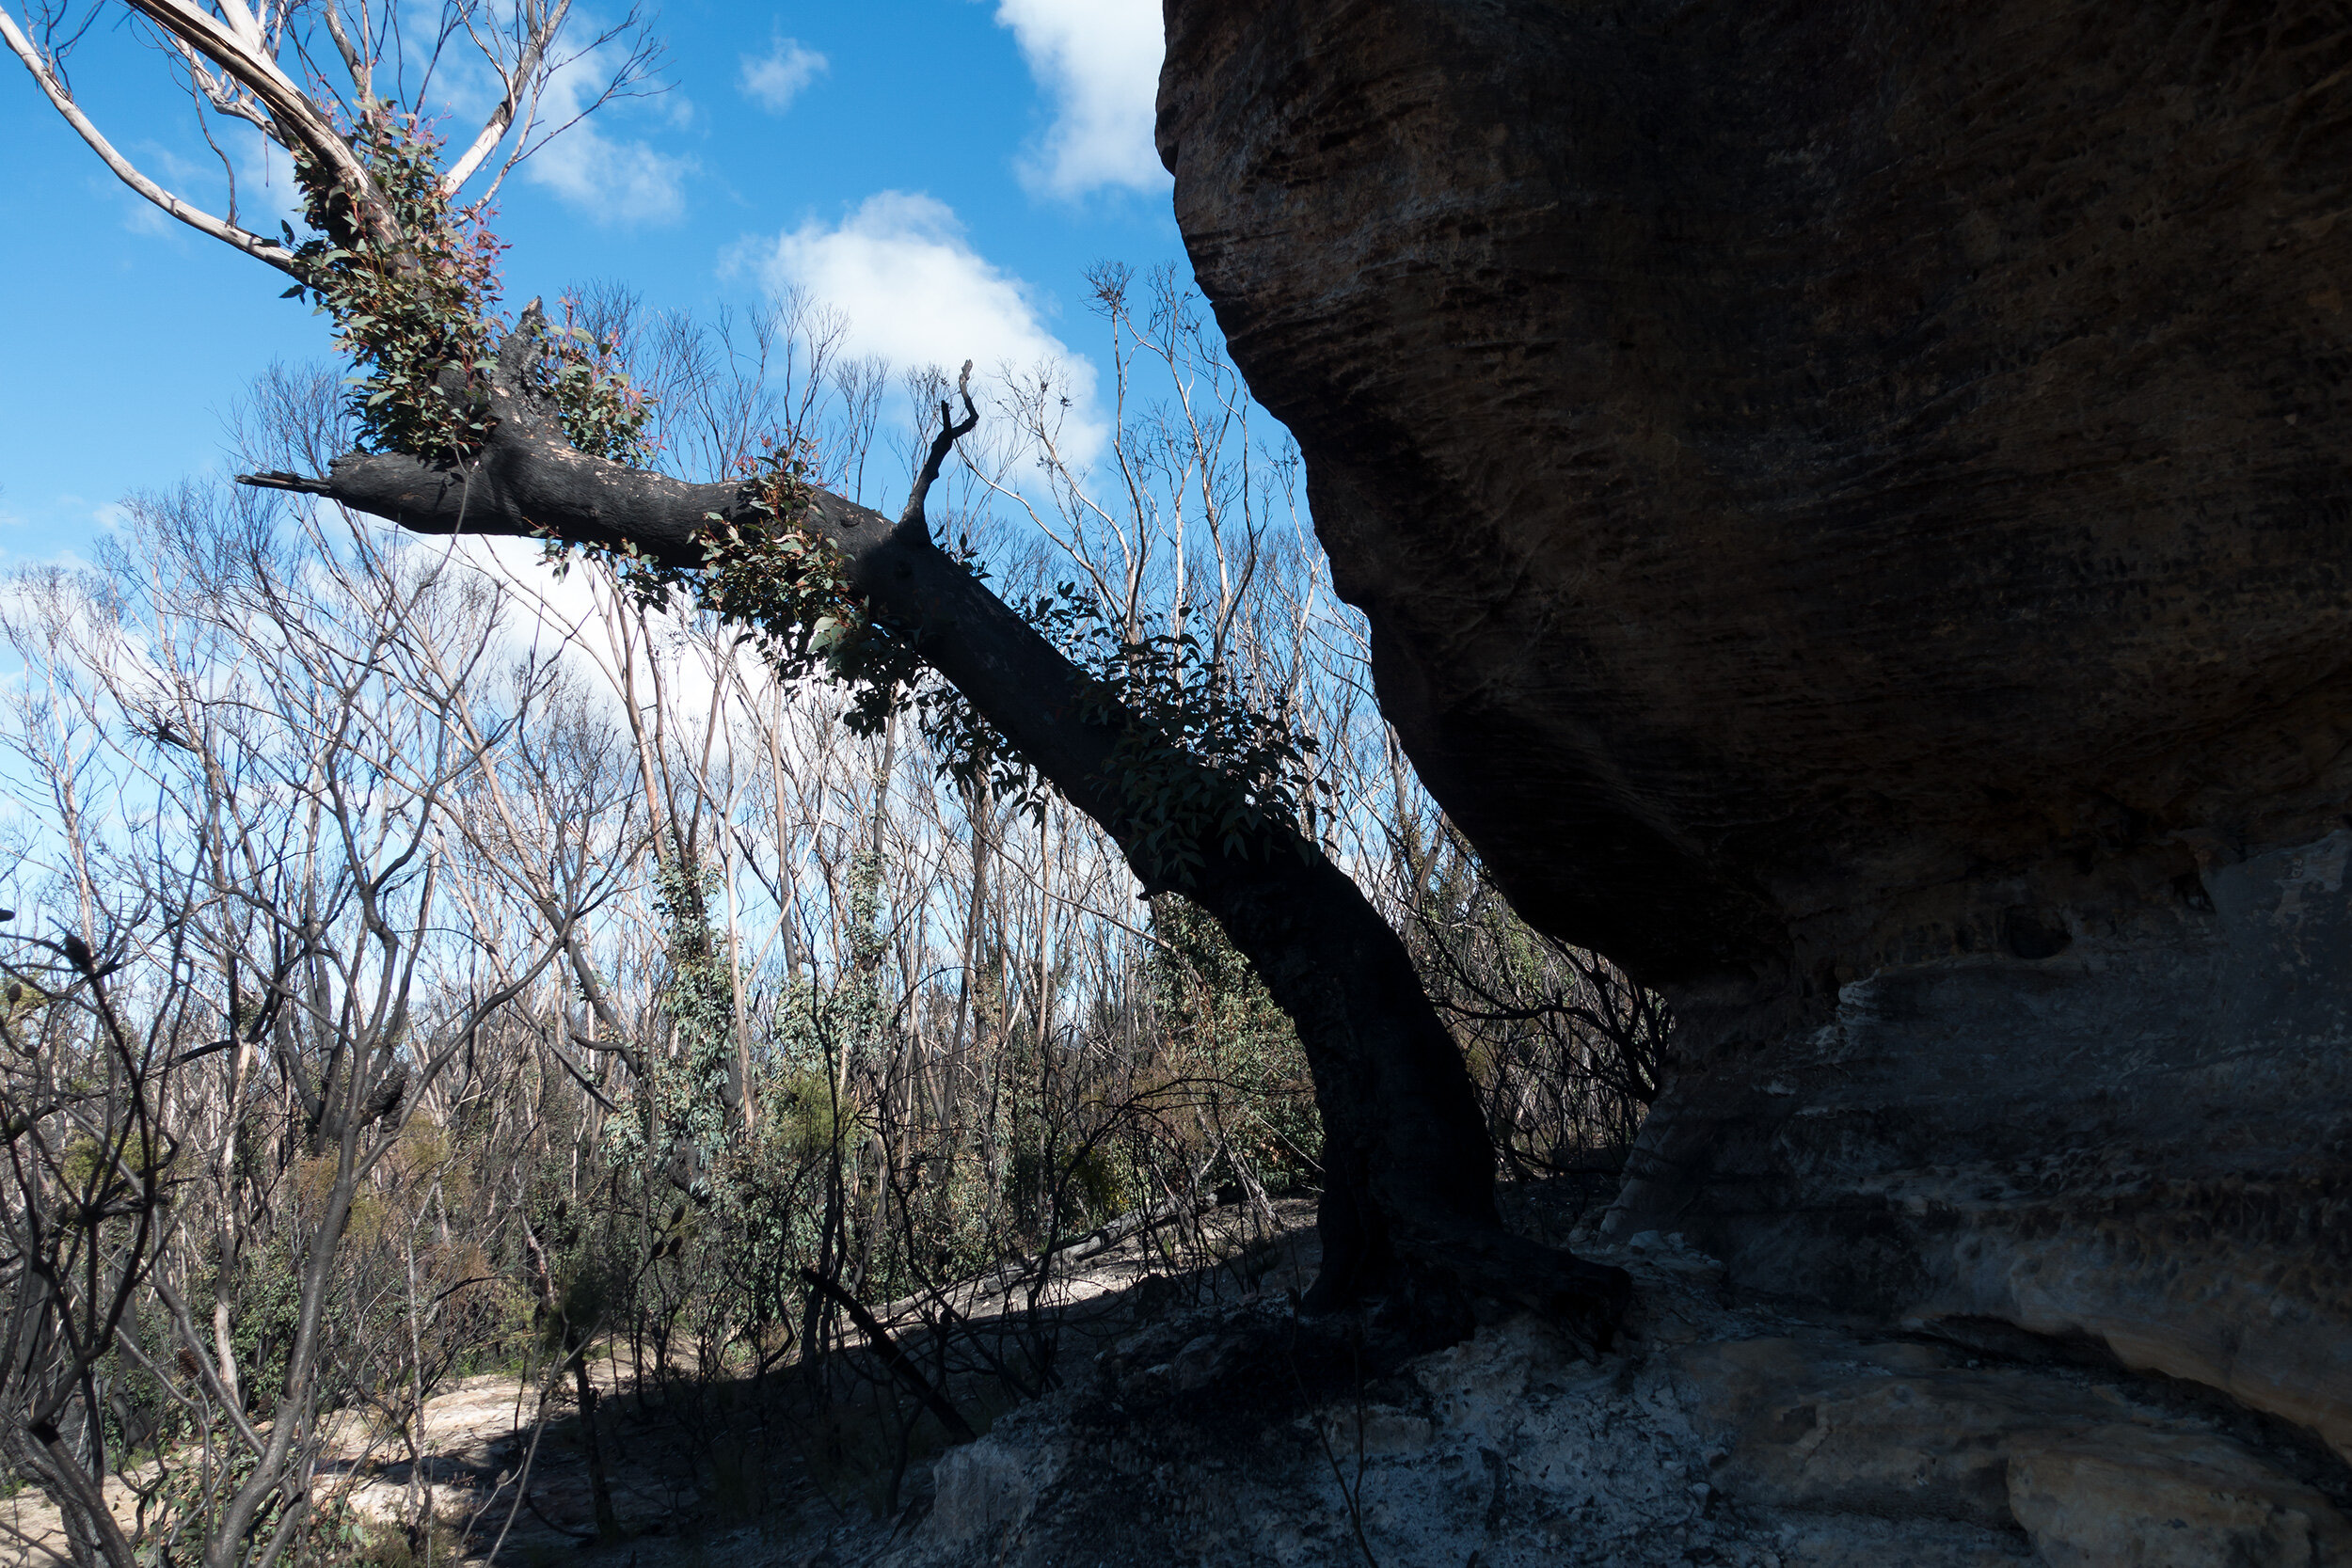 Fri 19 June 2020, vicinity Emu Cave, Blue Mountains National Park, contemplating nature.